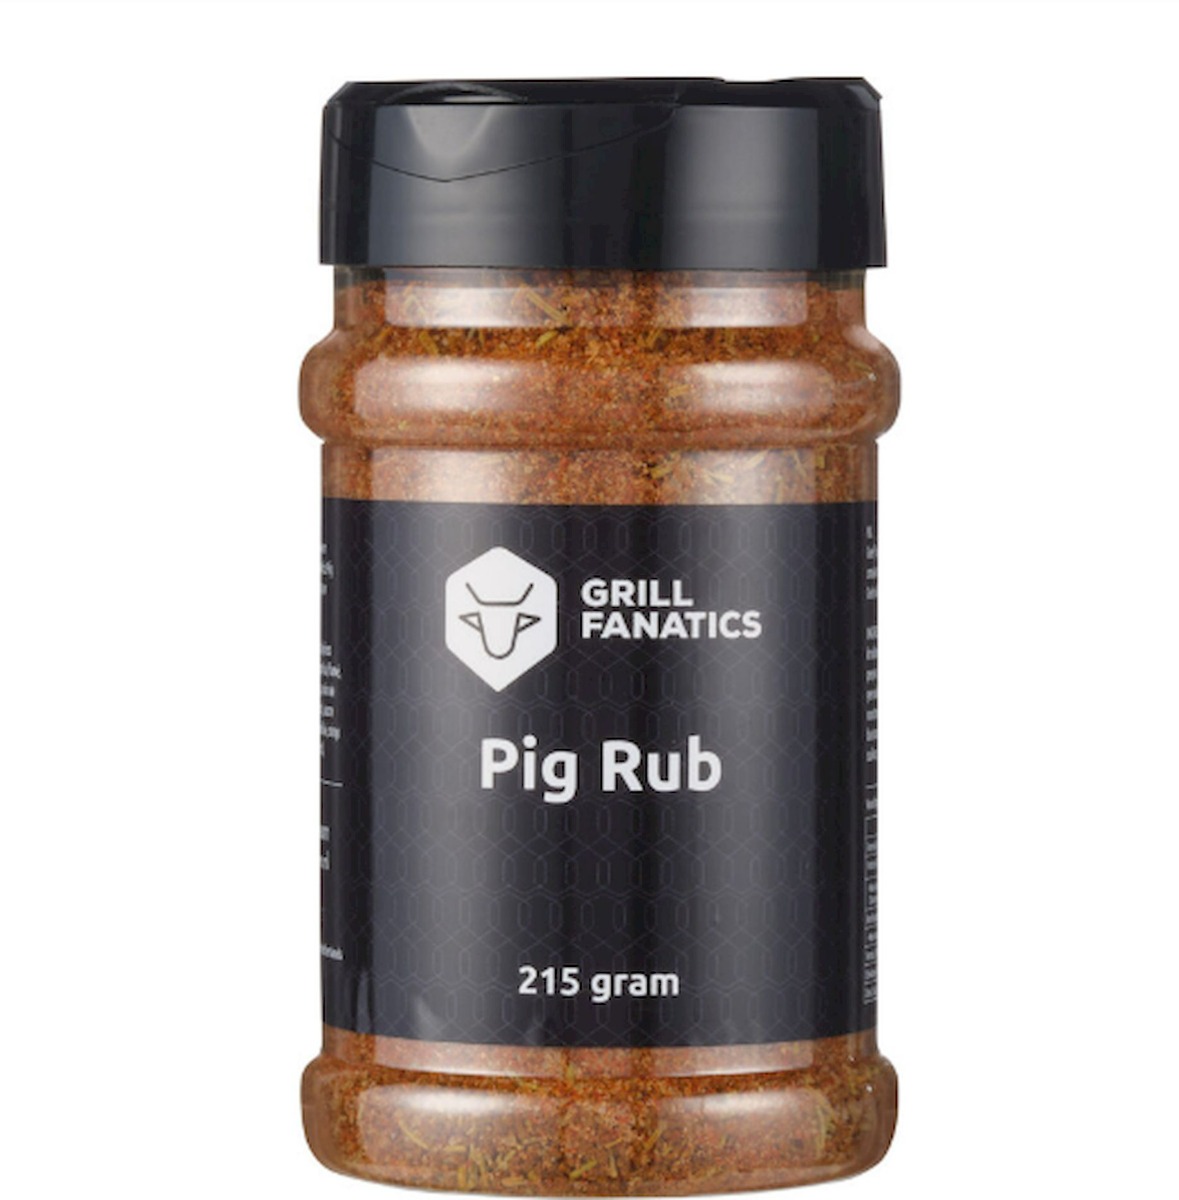 Grill Fanatics Pig rub 210 gram